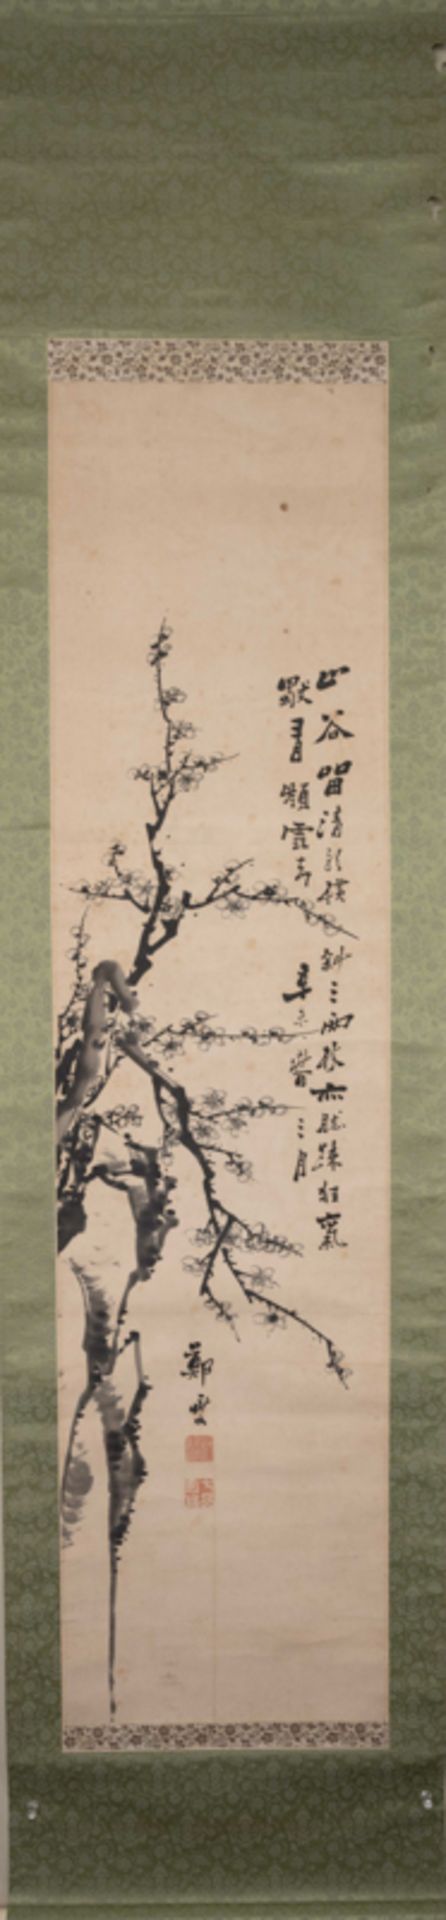 ZHENG BANQIAO (1693-1766), PLUM BLOSSOM 鄭板橋 墨梅 - Image 2 of 11